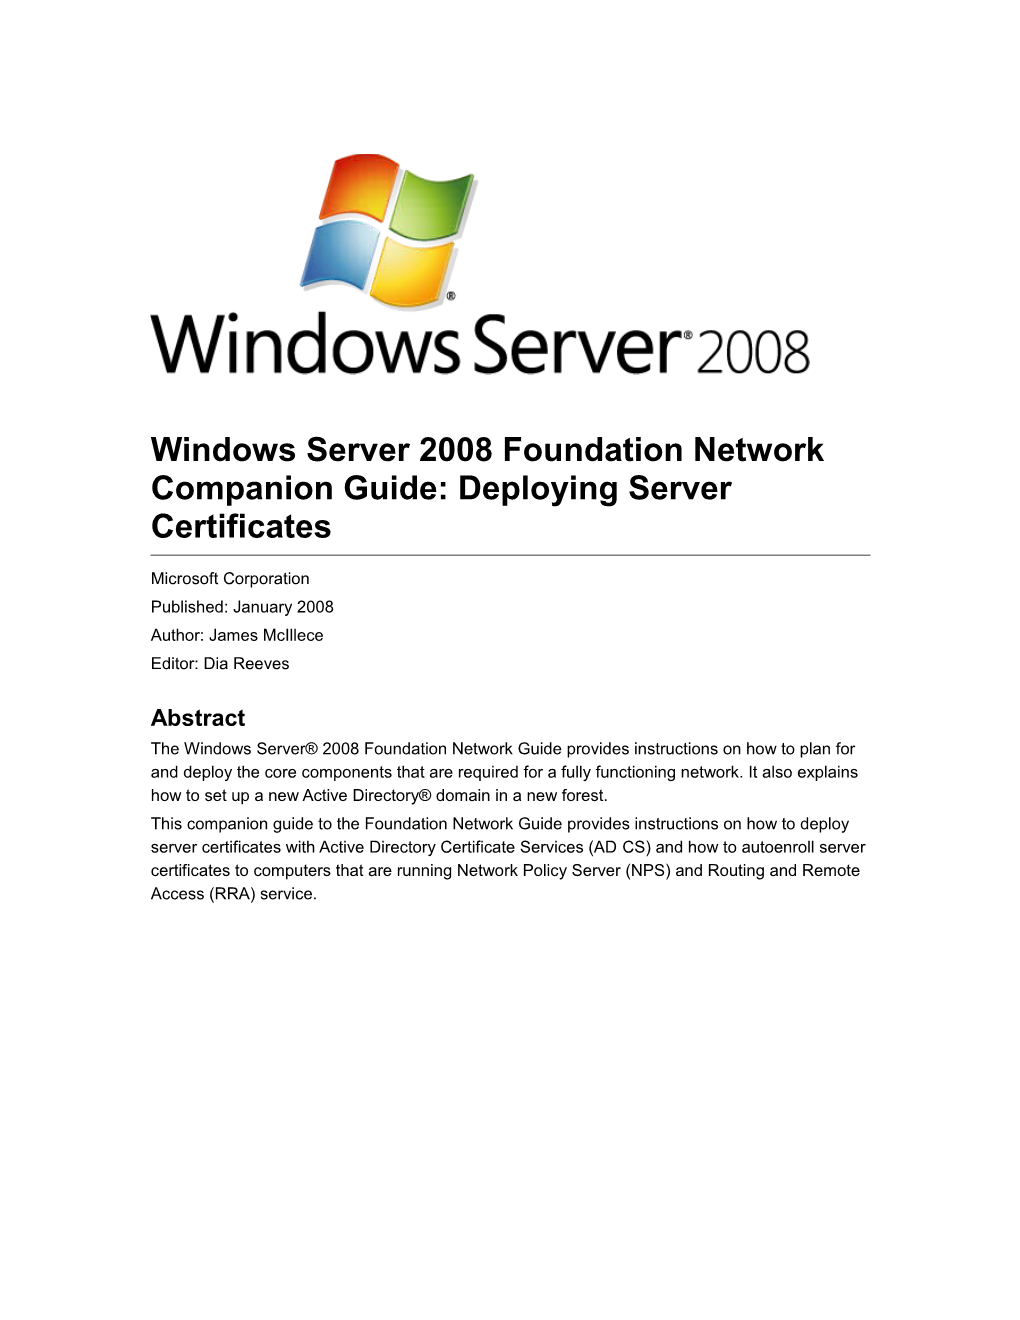 Windowsserver2008 Foundation Network Companion Guide: Deploying Server Certificates